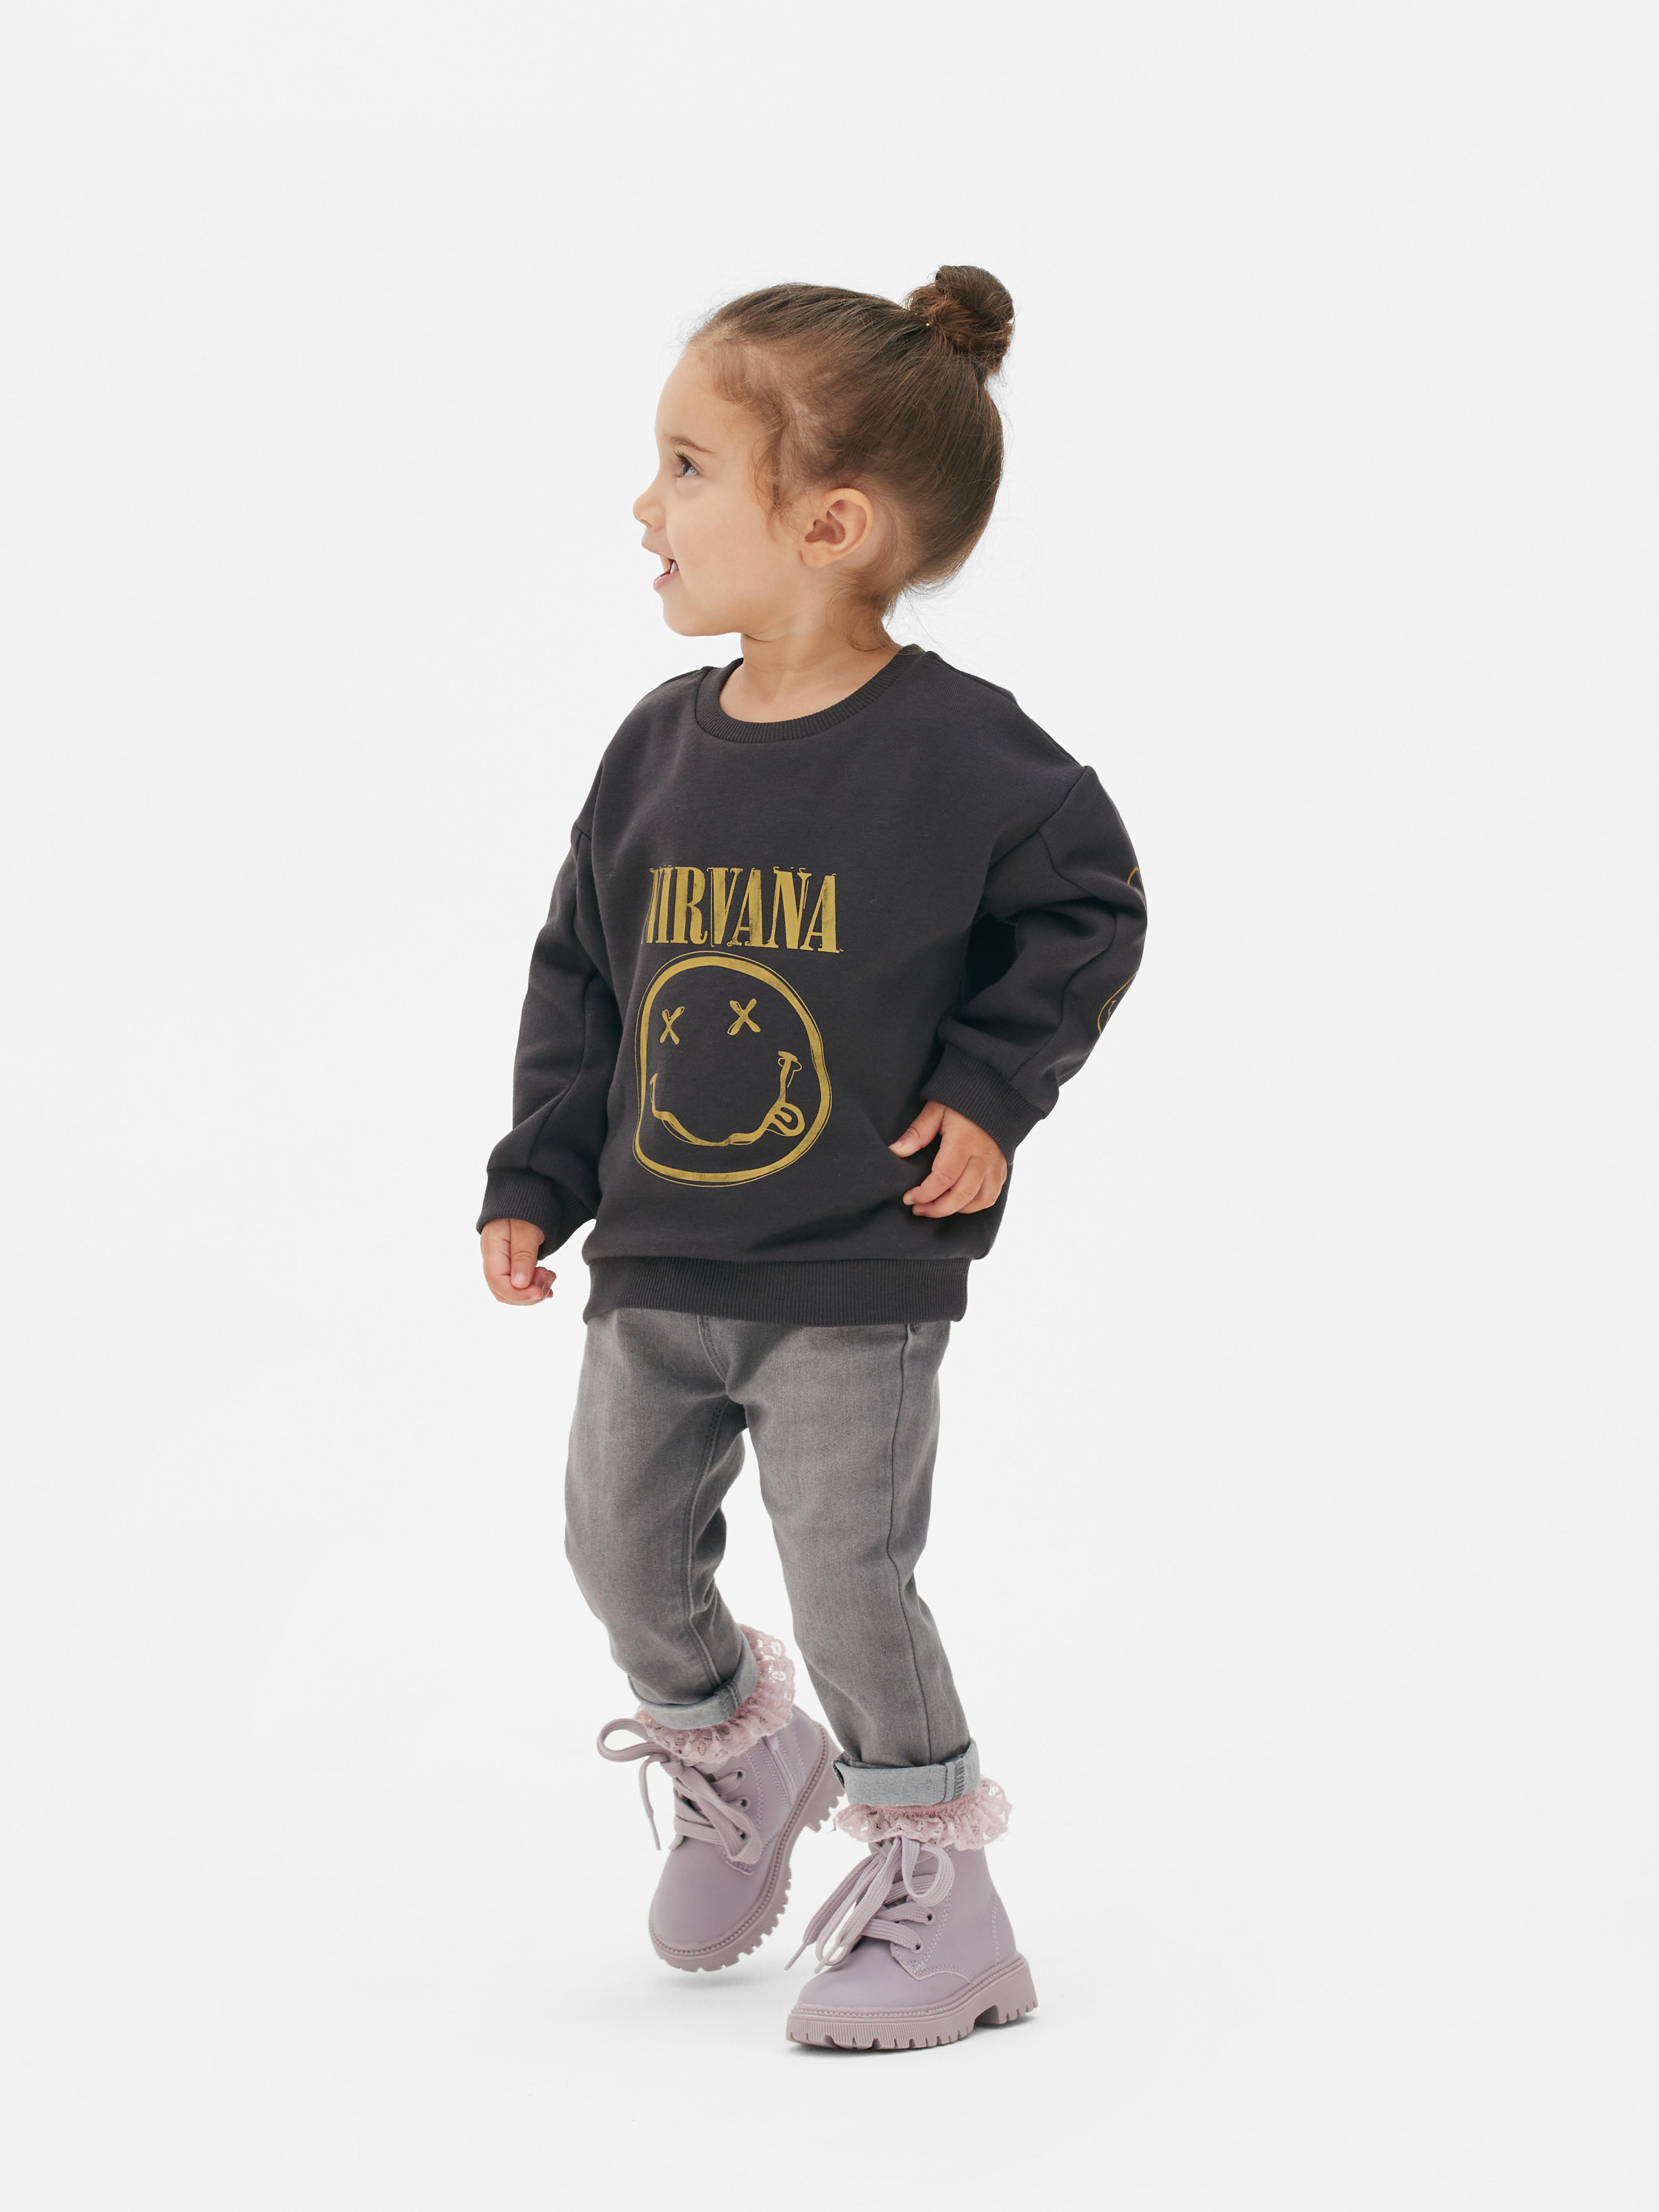 „Nirvana“ Sweatshirt mit Grafik